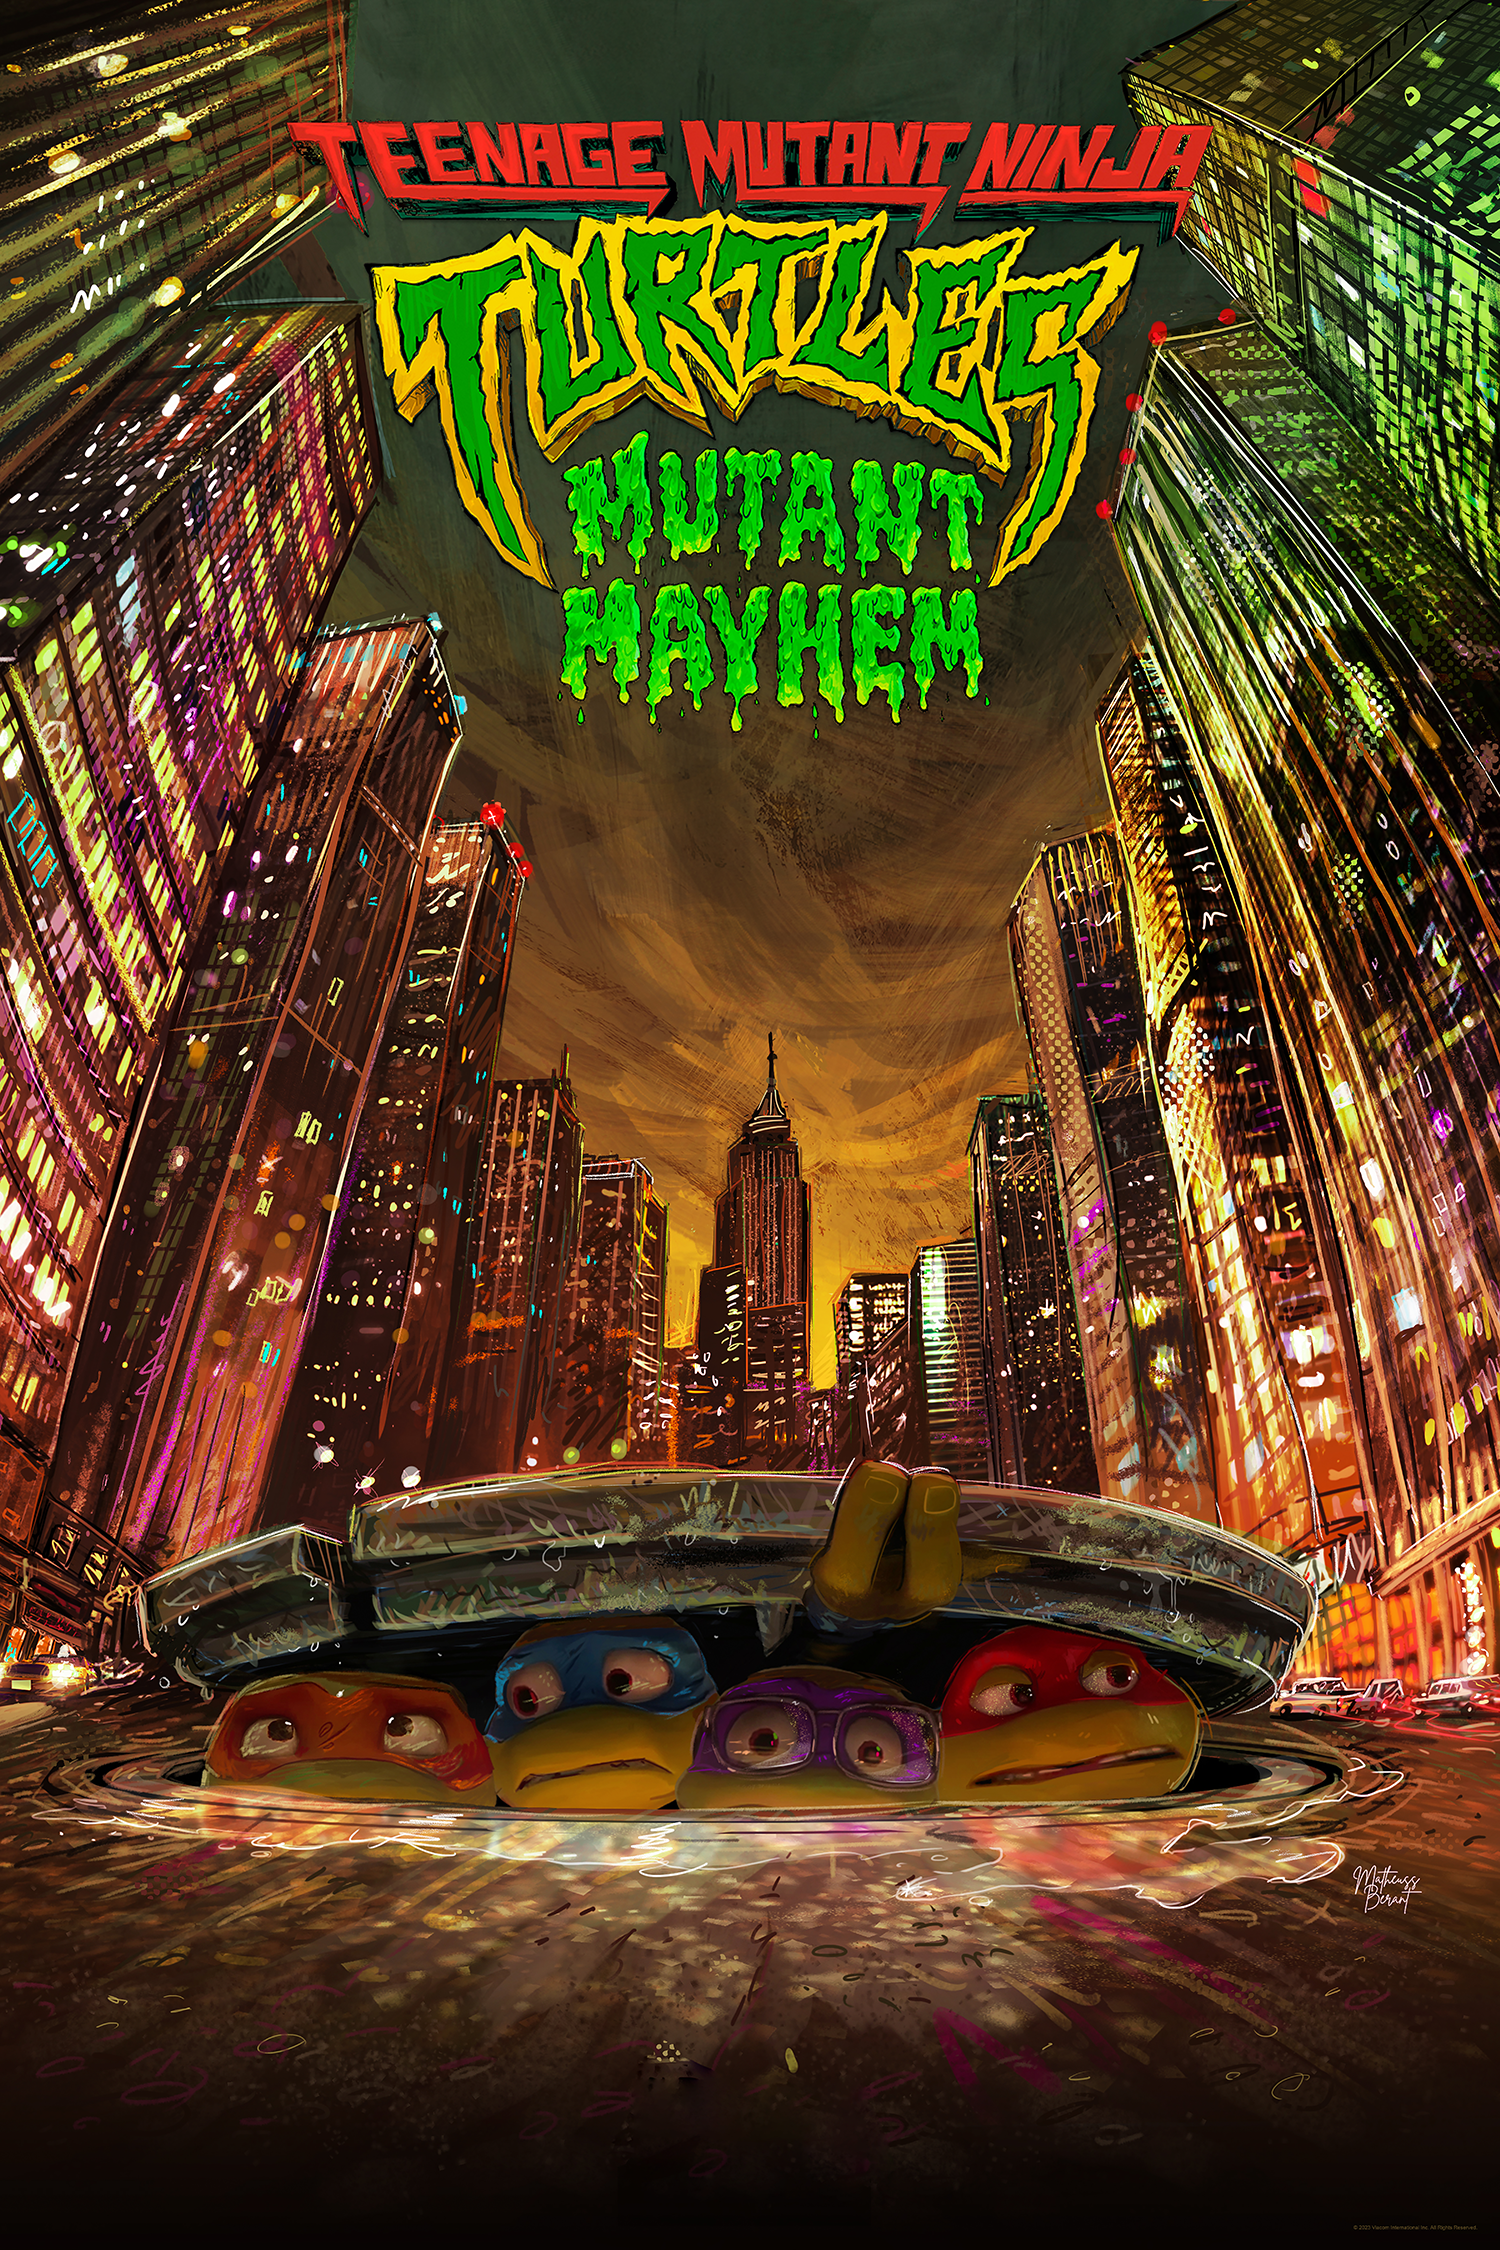 TMNT: Mutant Mayhem Poster by matuta2002 on DeviantArt